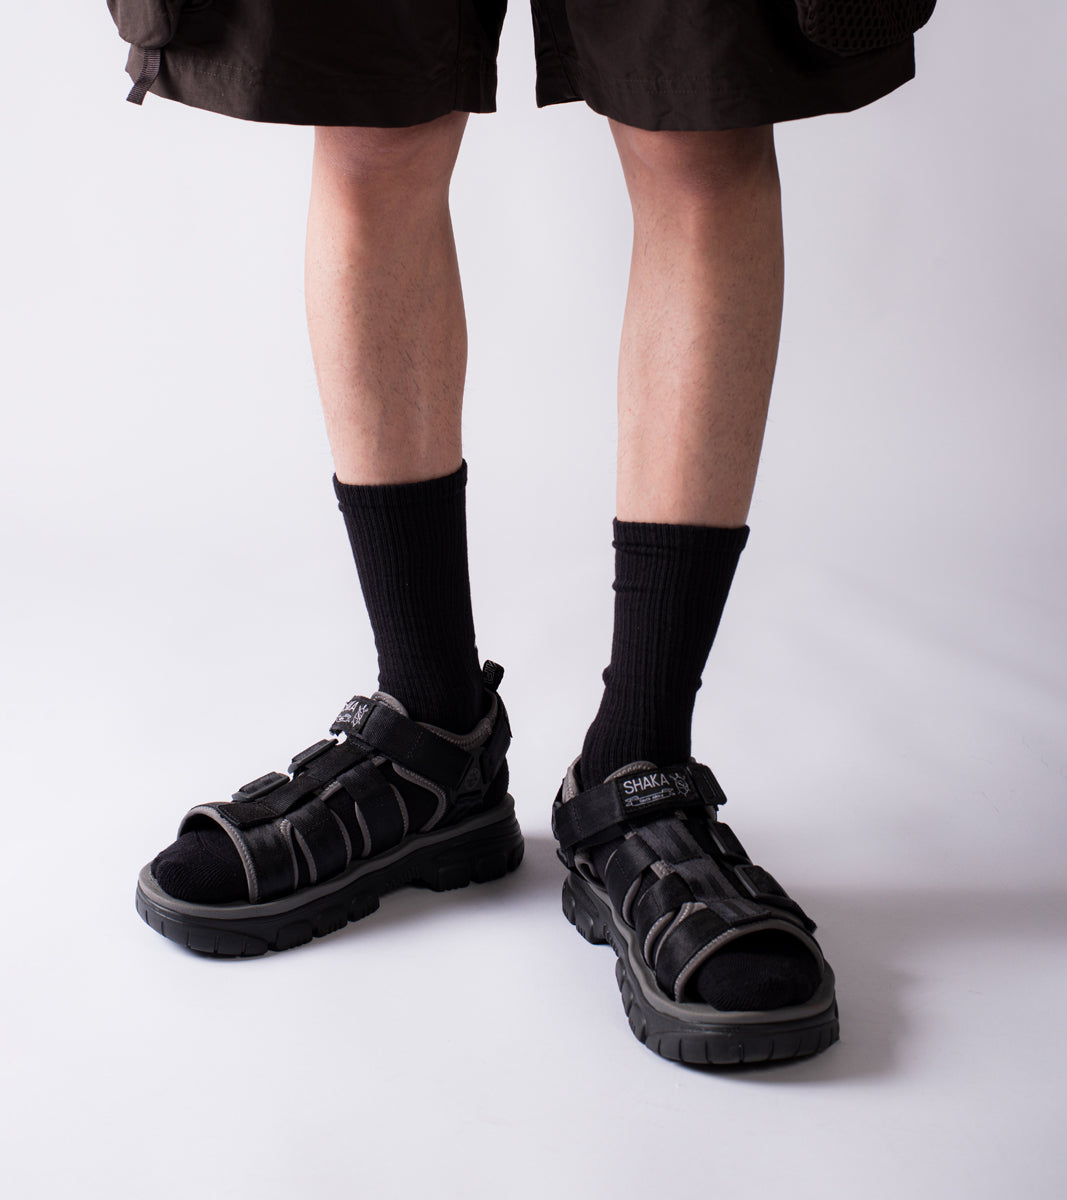 Essential Crew Casual Socks - Black